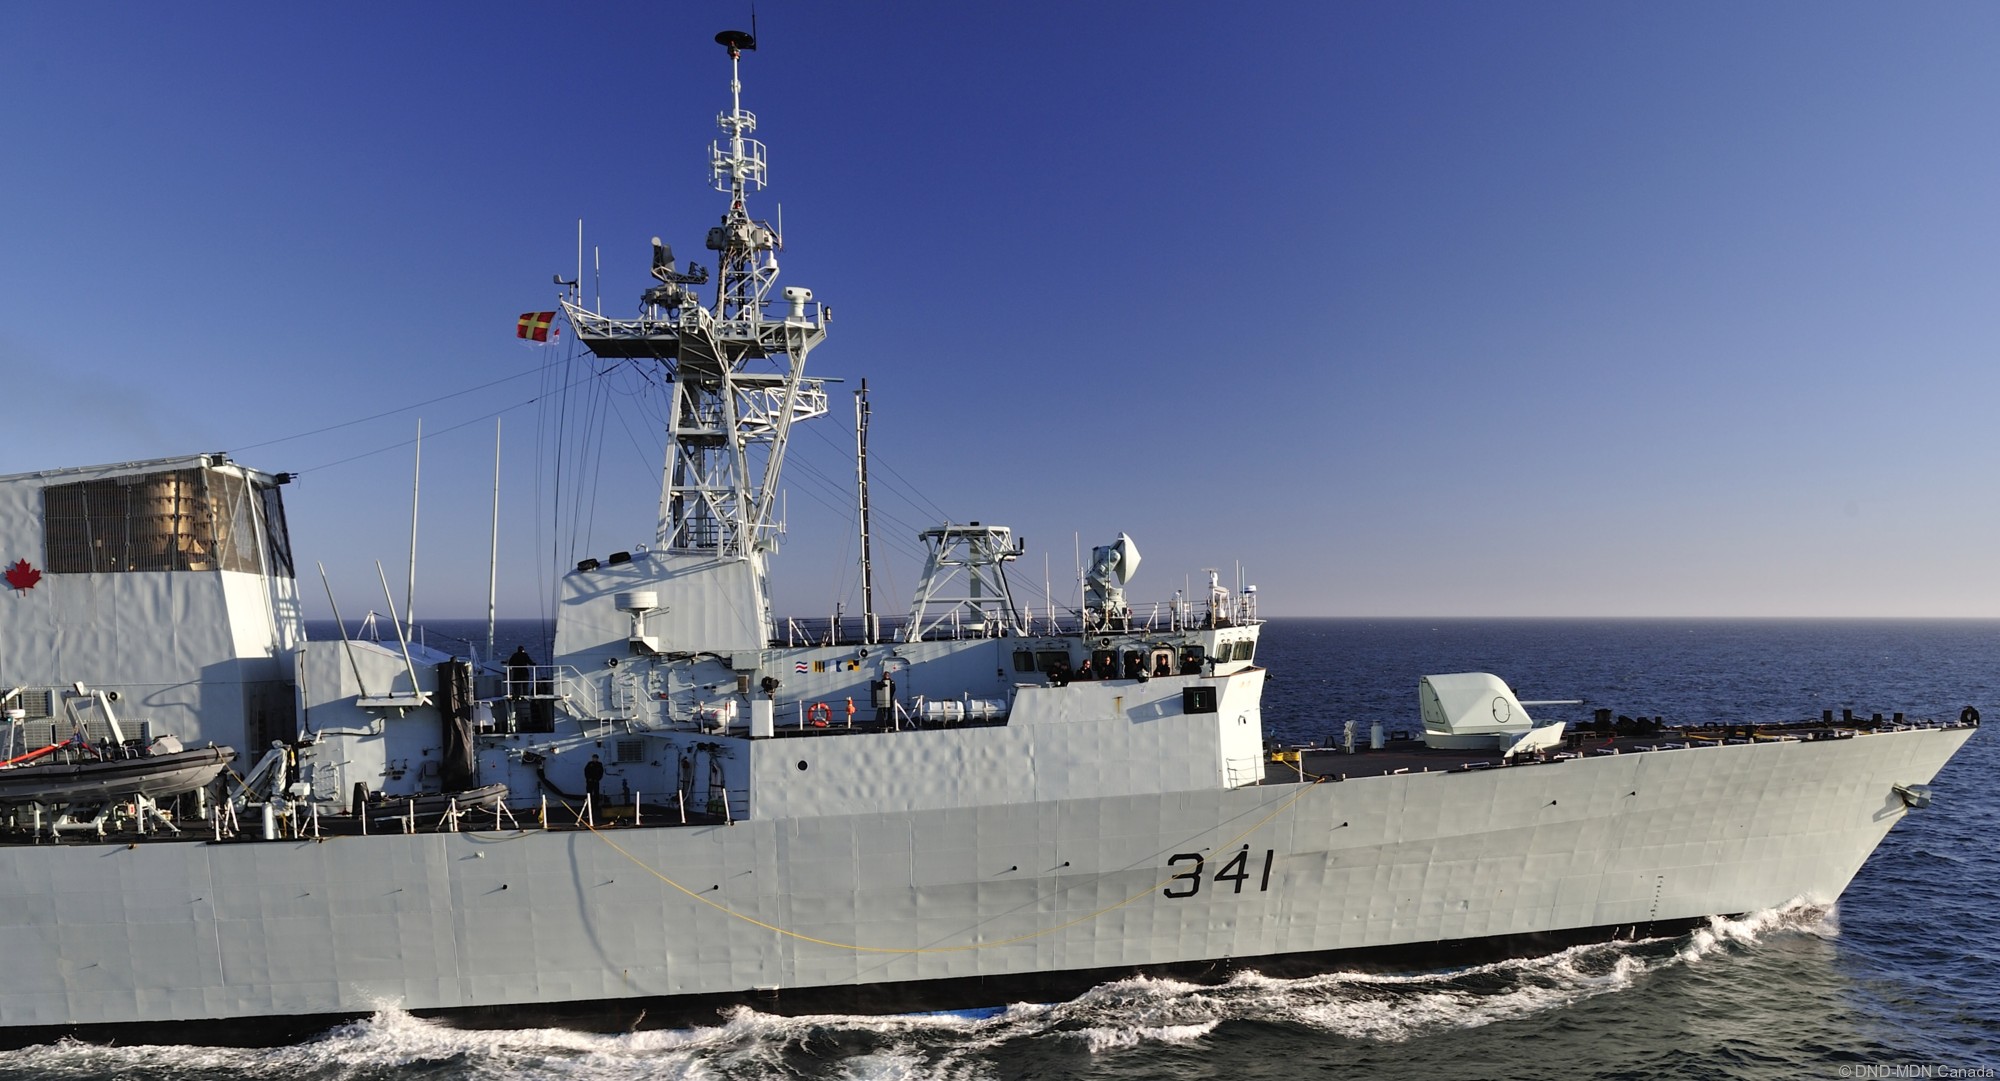 ffh-441 hmcs ottawa halifax class helicopter patrol frigate ncsm royal canadian navy 30